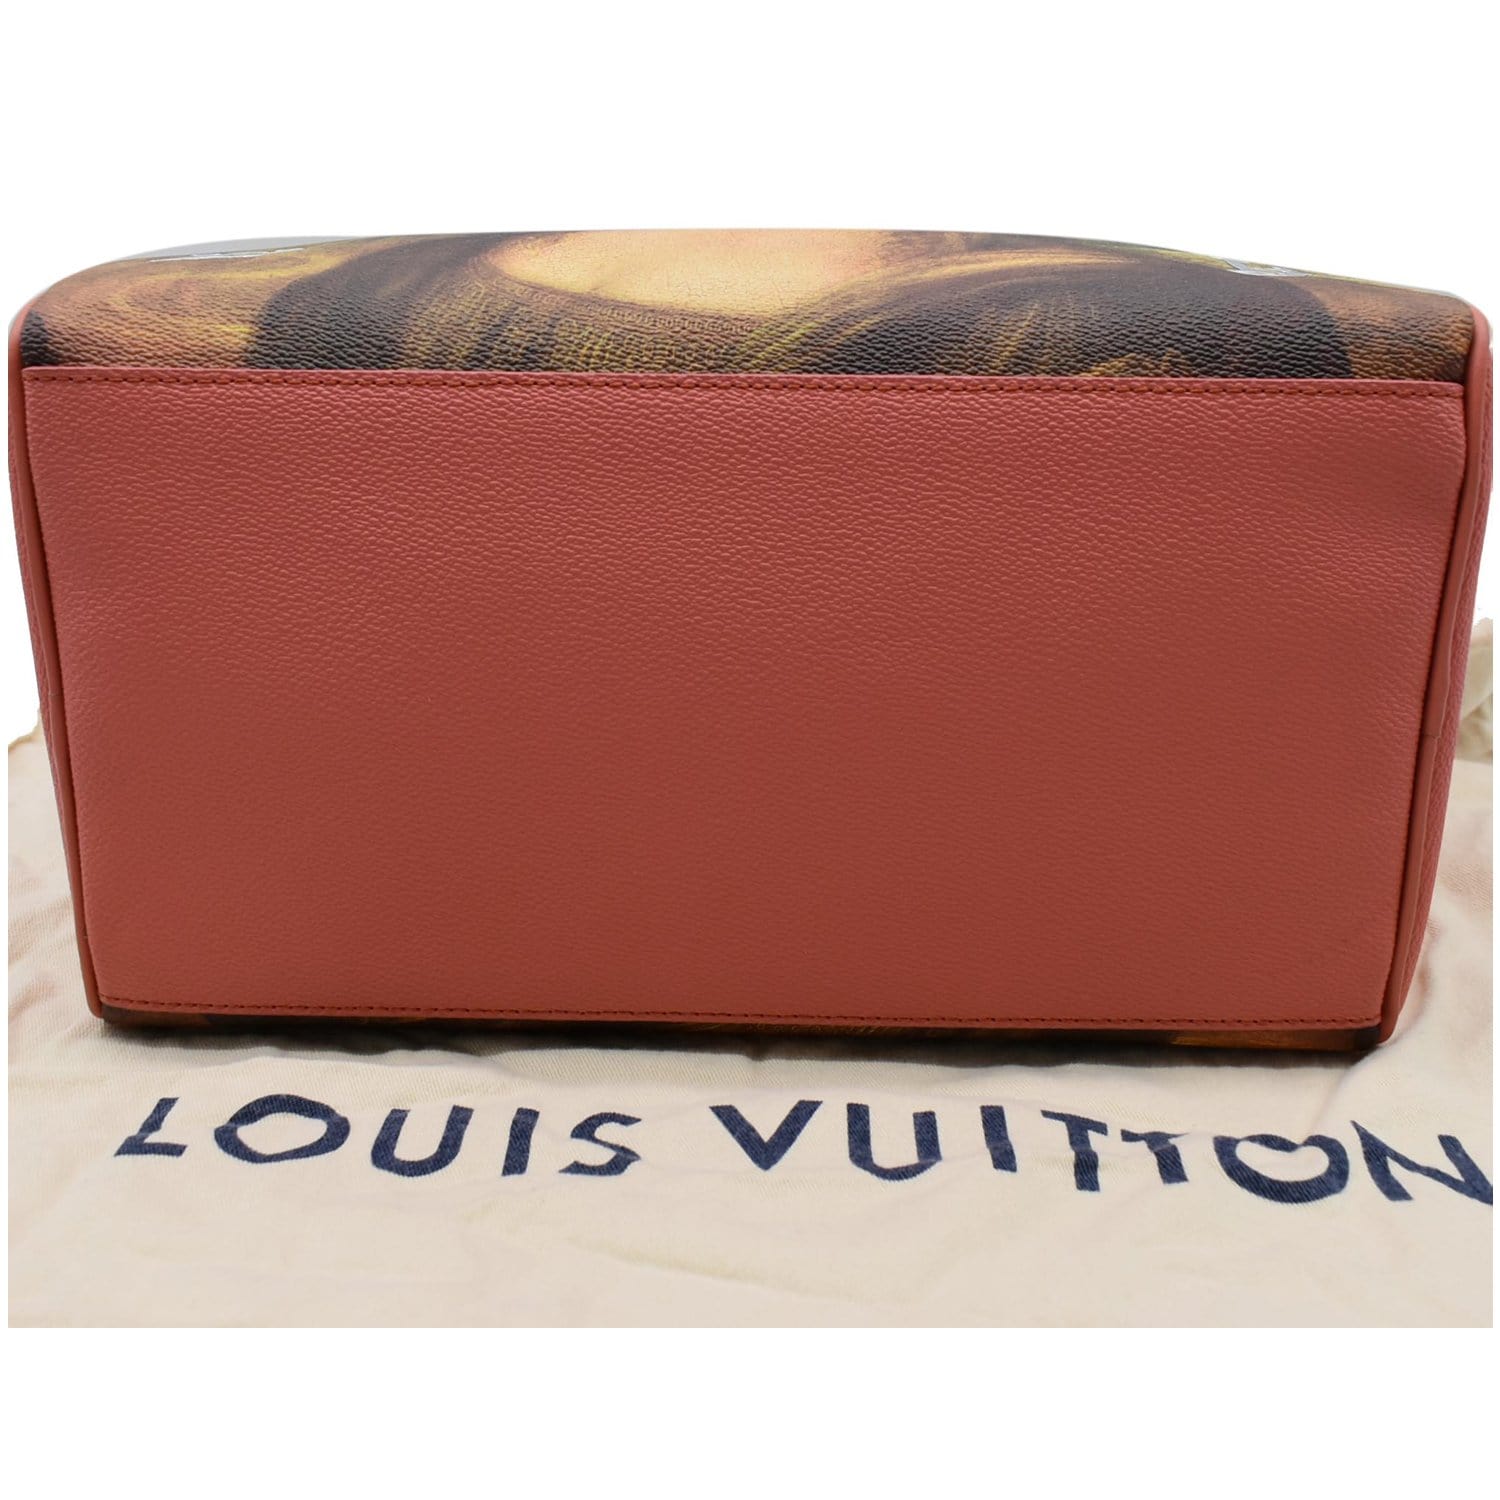 Louis Vuitton Speedy Handbag Limited Edition Jeff Koons Fragonard Print  Canvas at 1stDibs